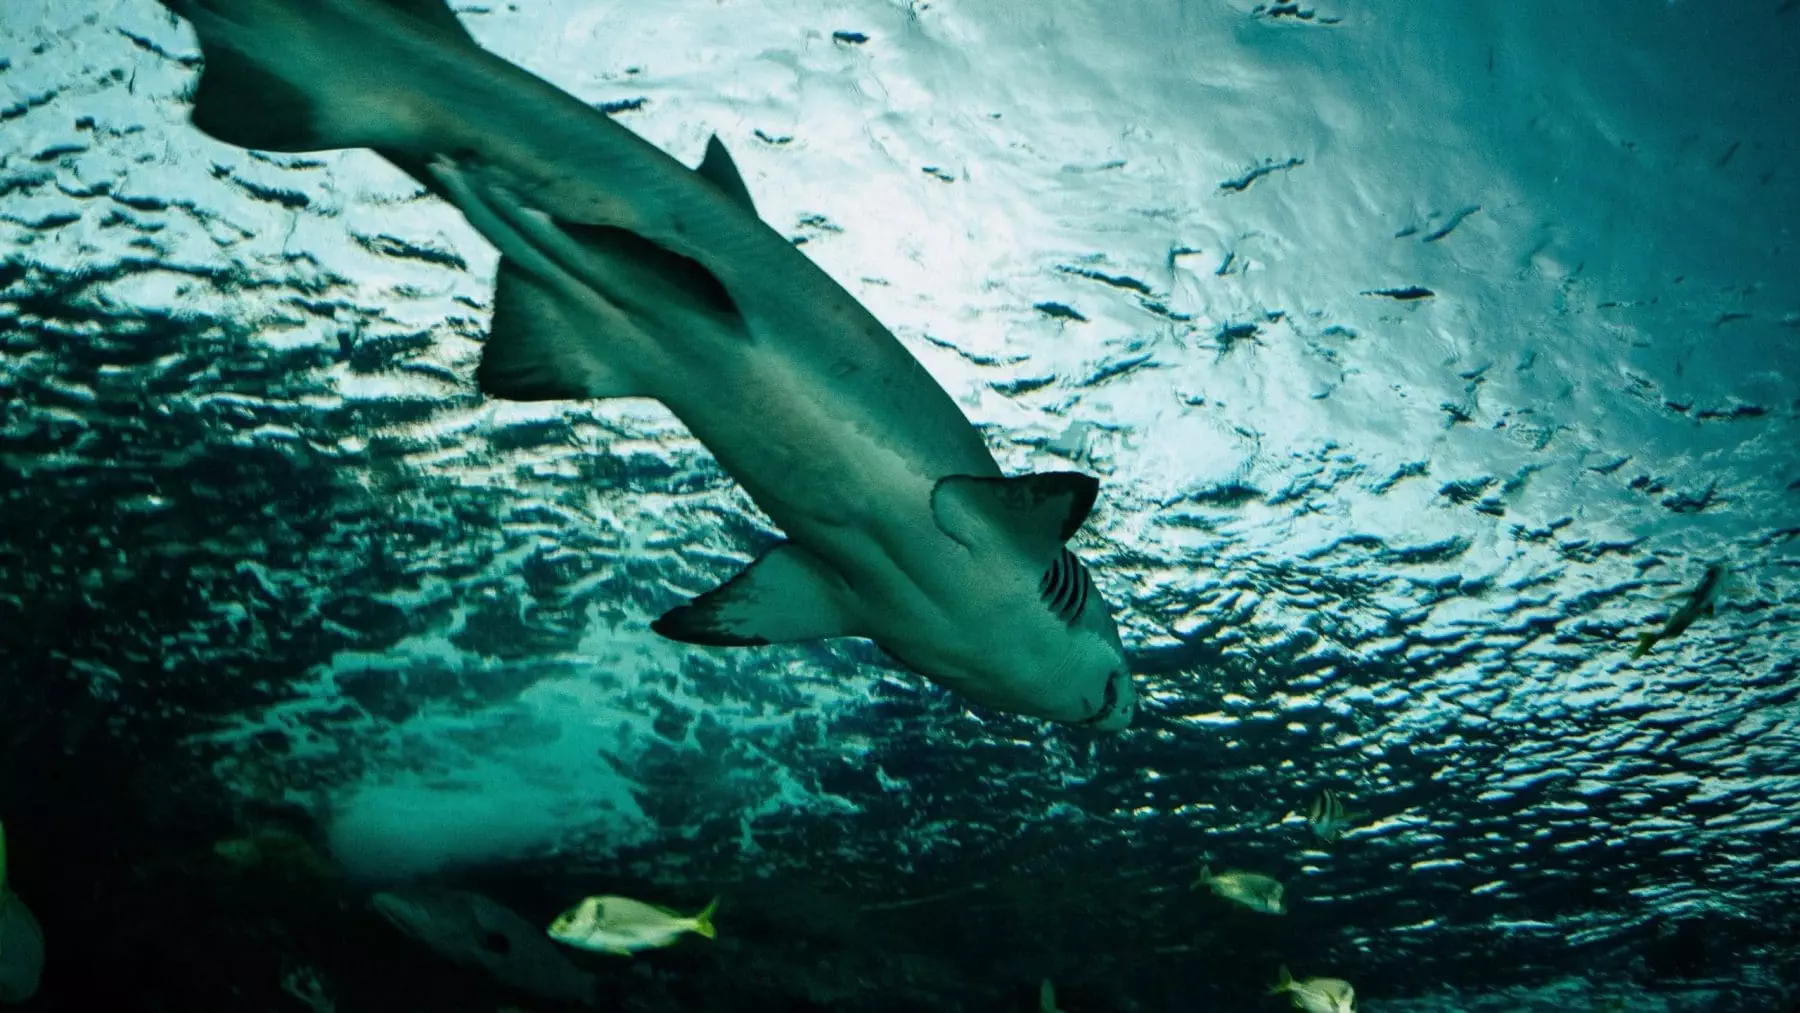 Shark swimmig